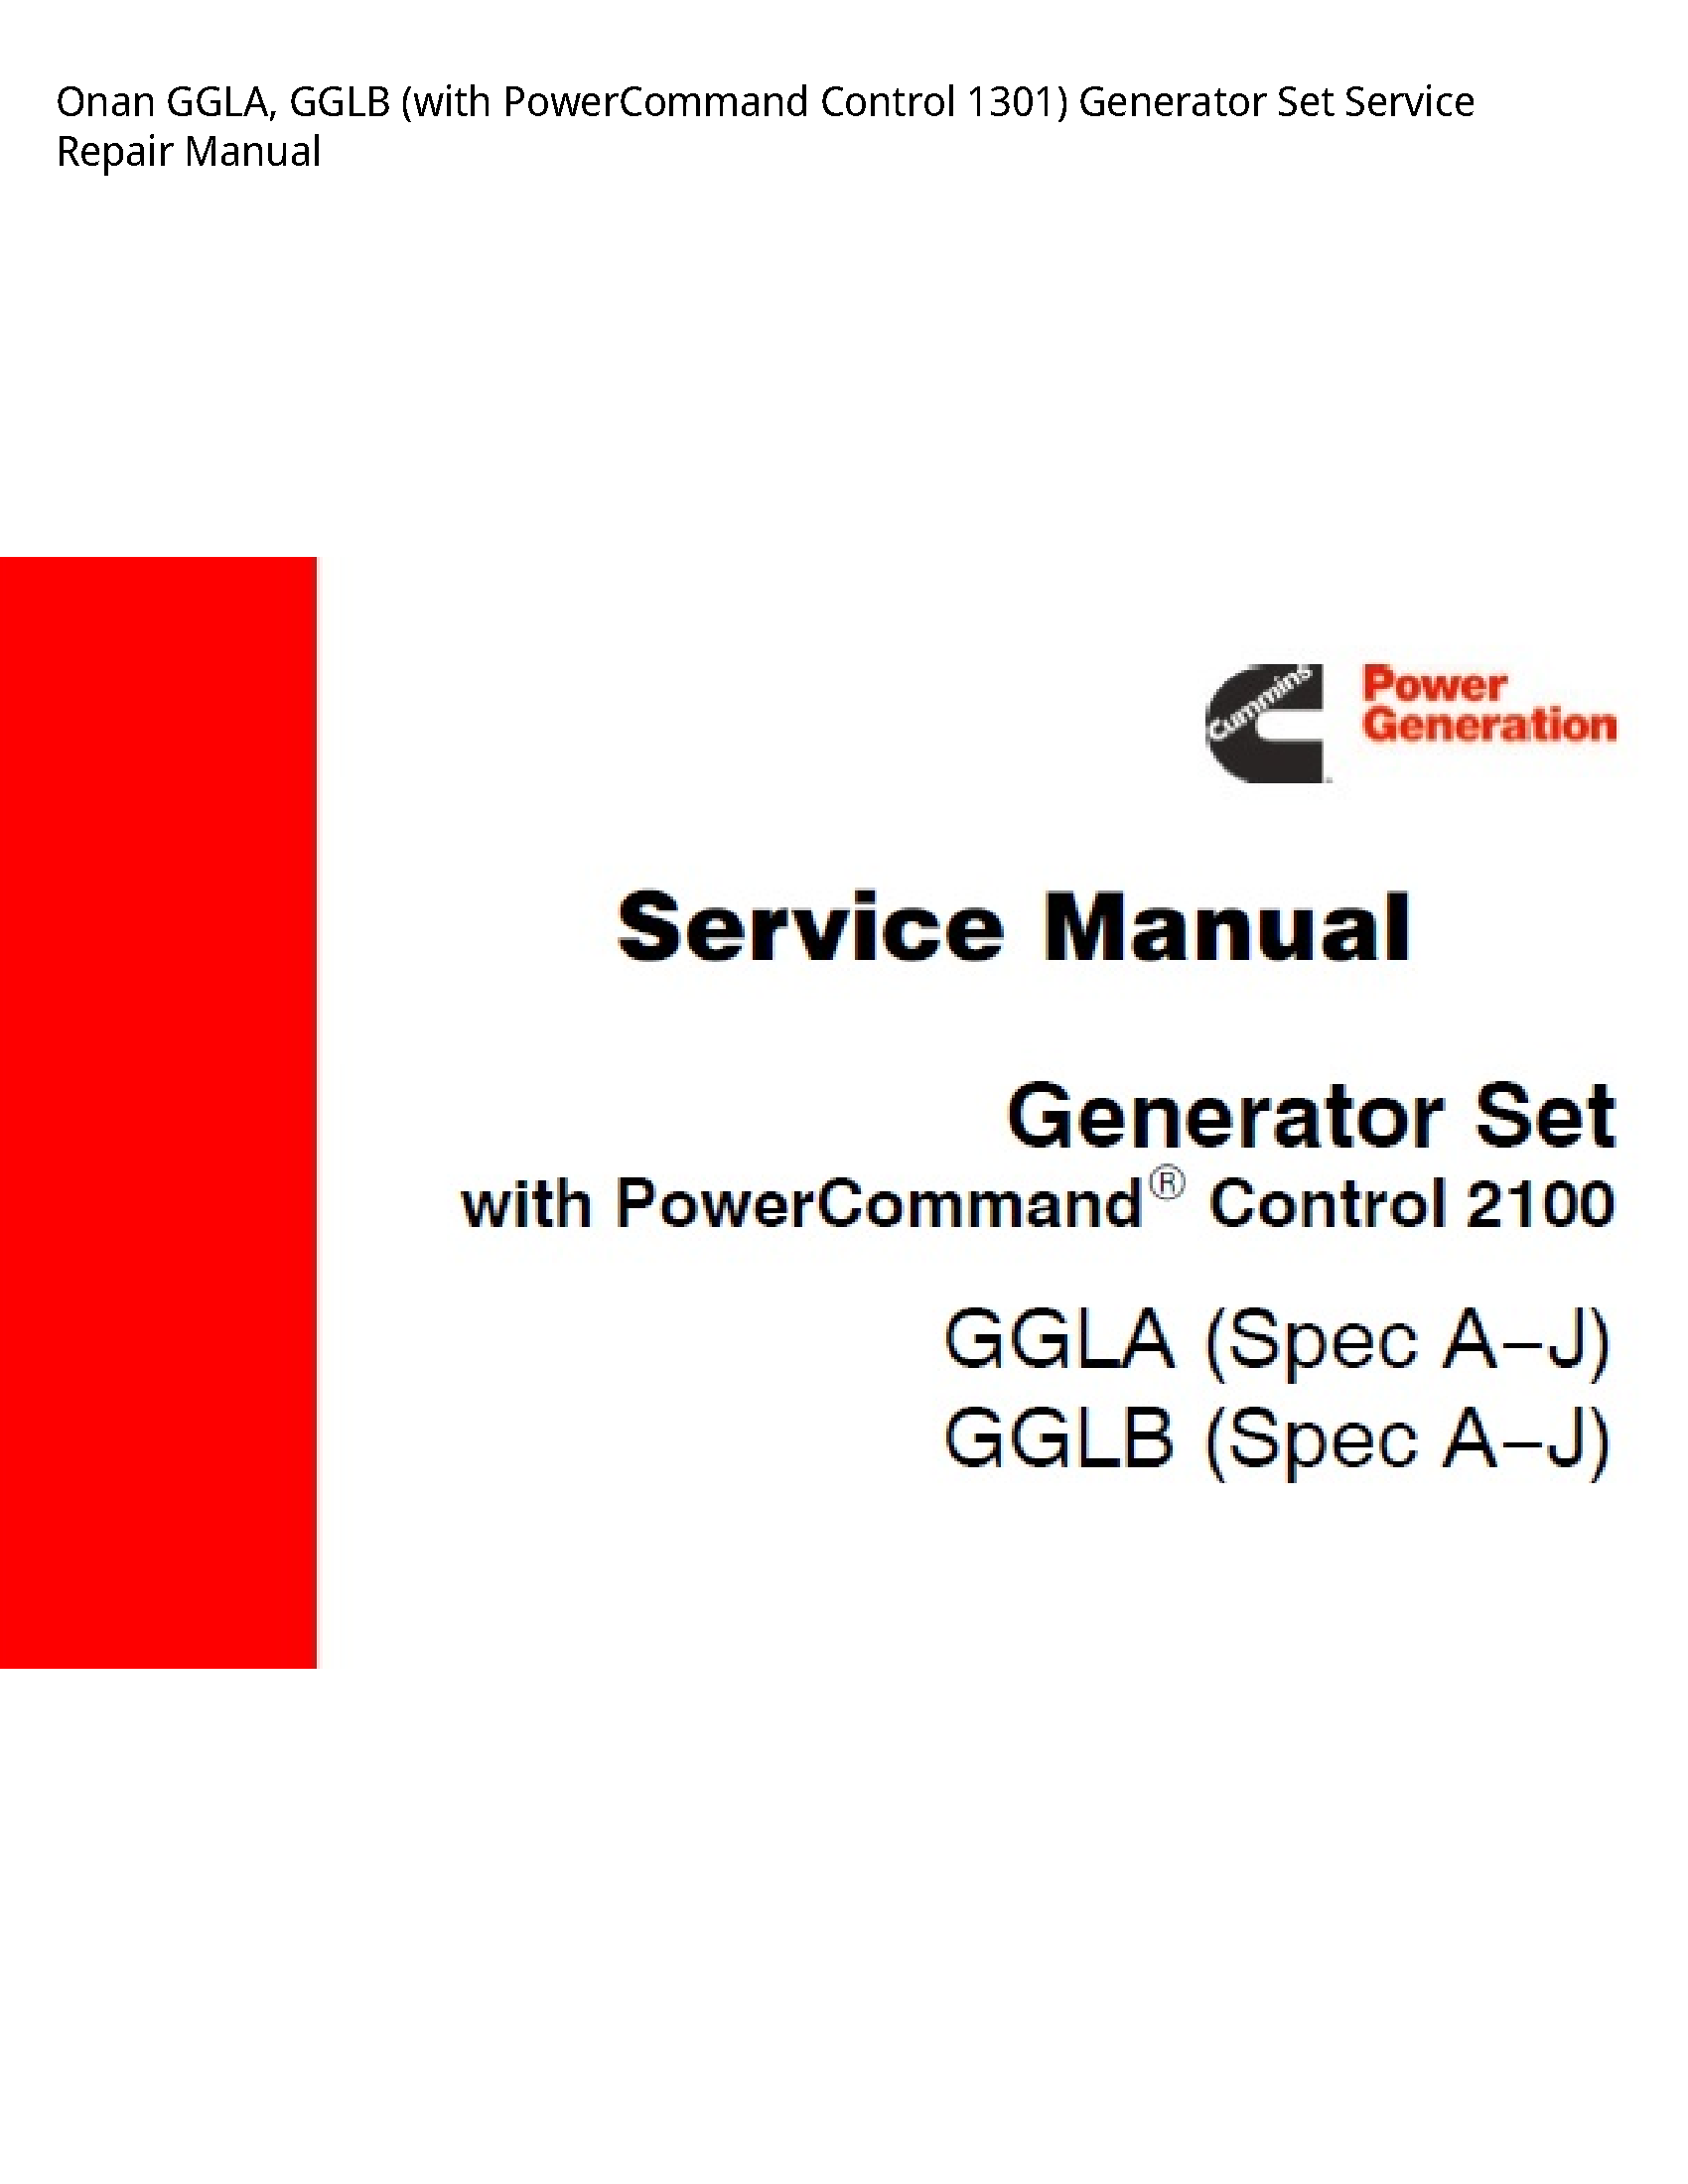 Onan 1301) GGLA manual